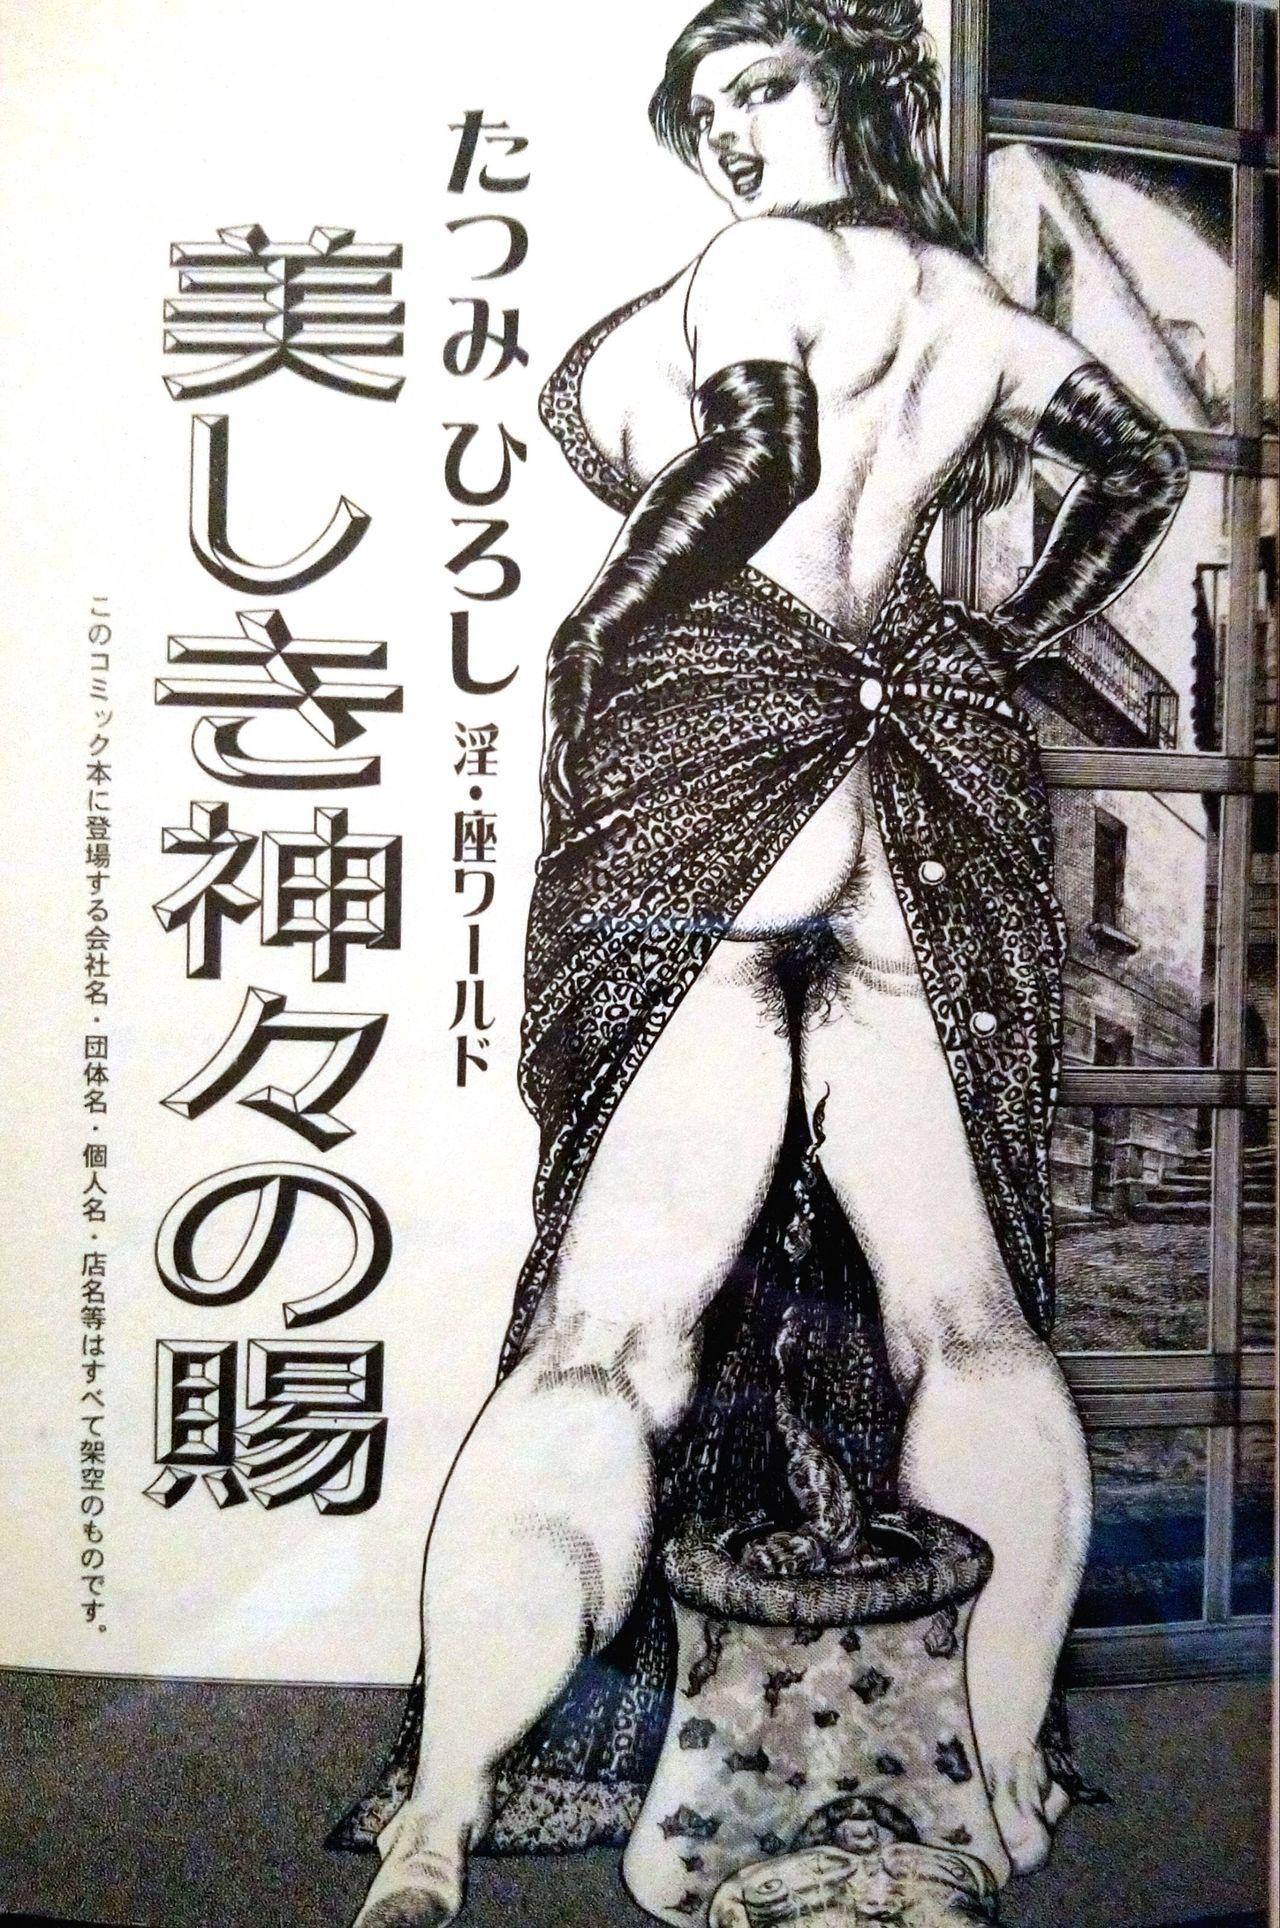 Hiroshi Tatsumi Book 2 - Chapitre 1 - "Group Of Merciless" 0